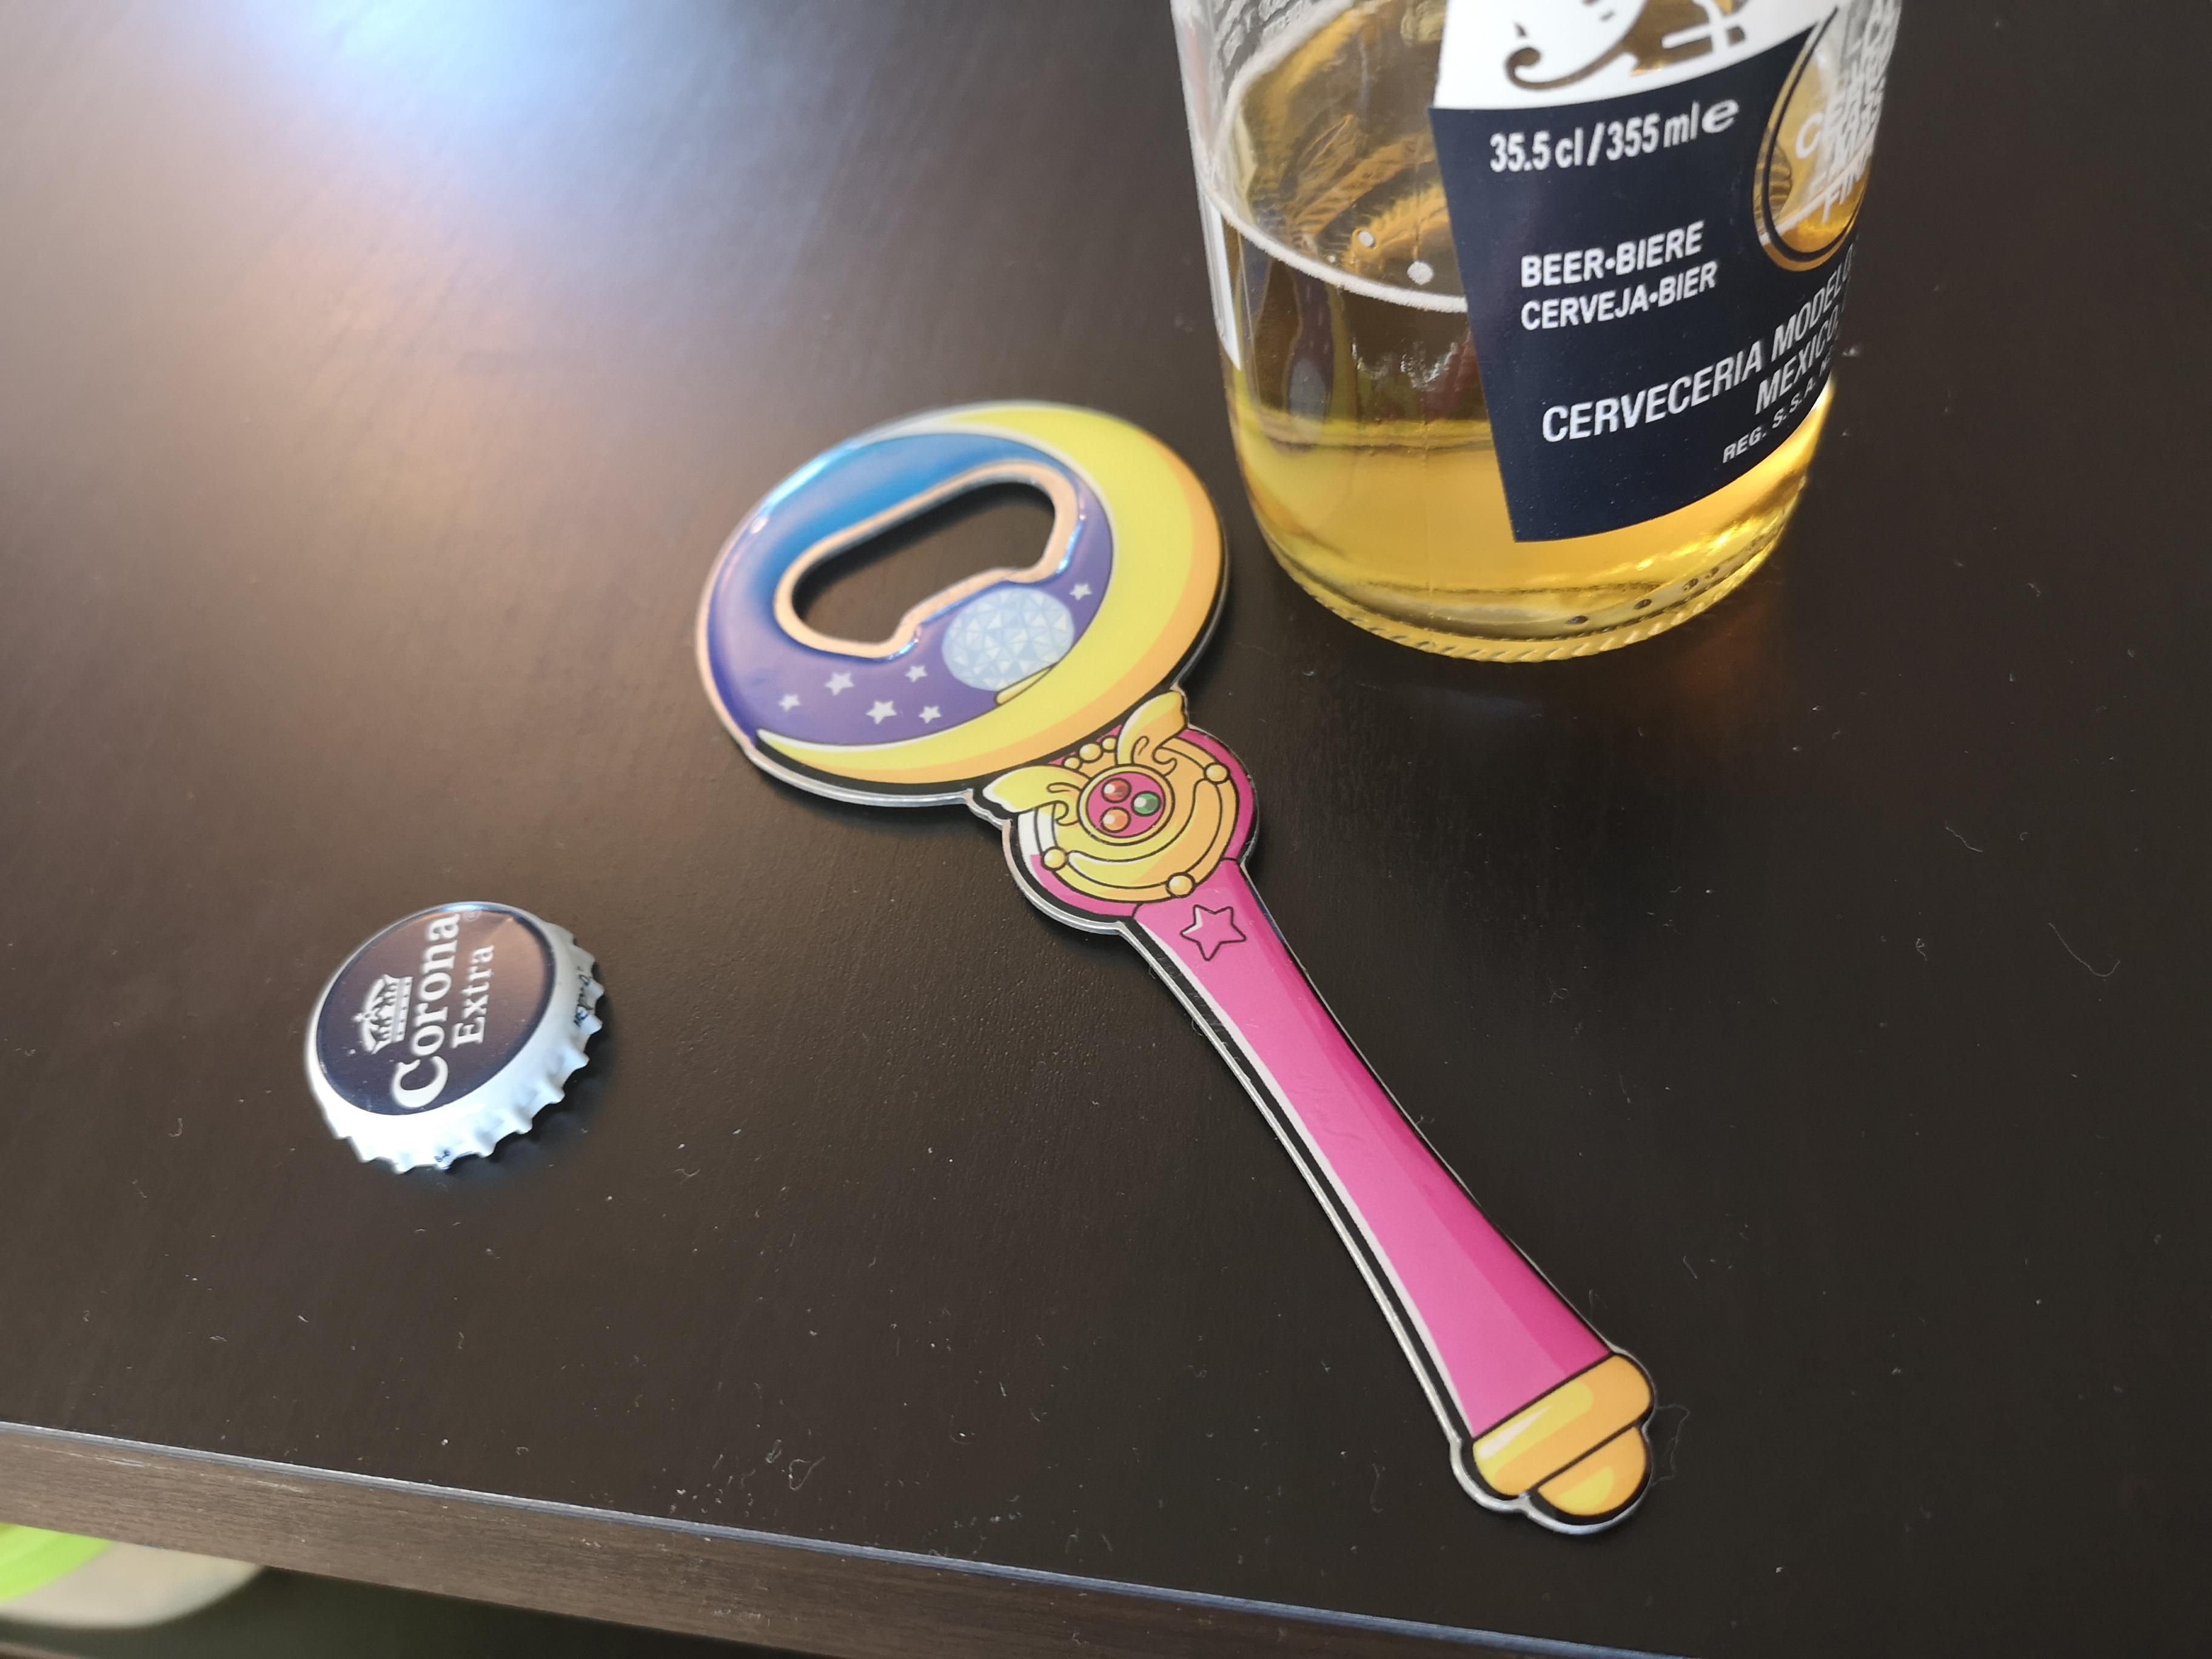 Got this badass beer opener in a Loot box :D